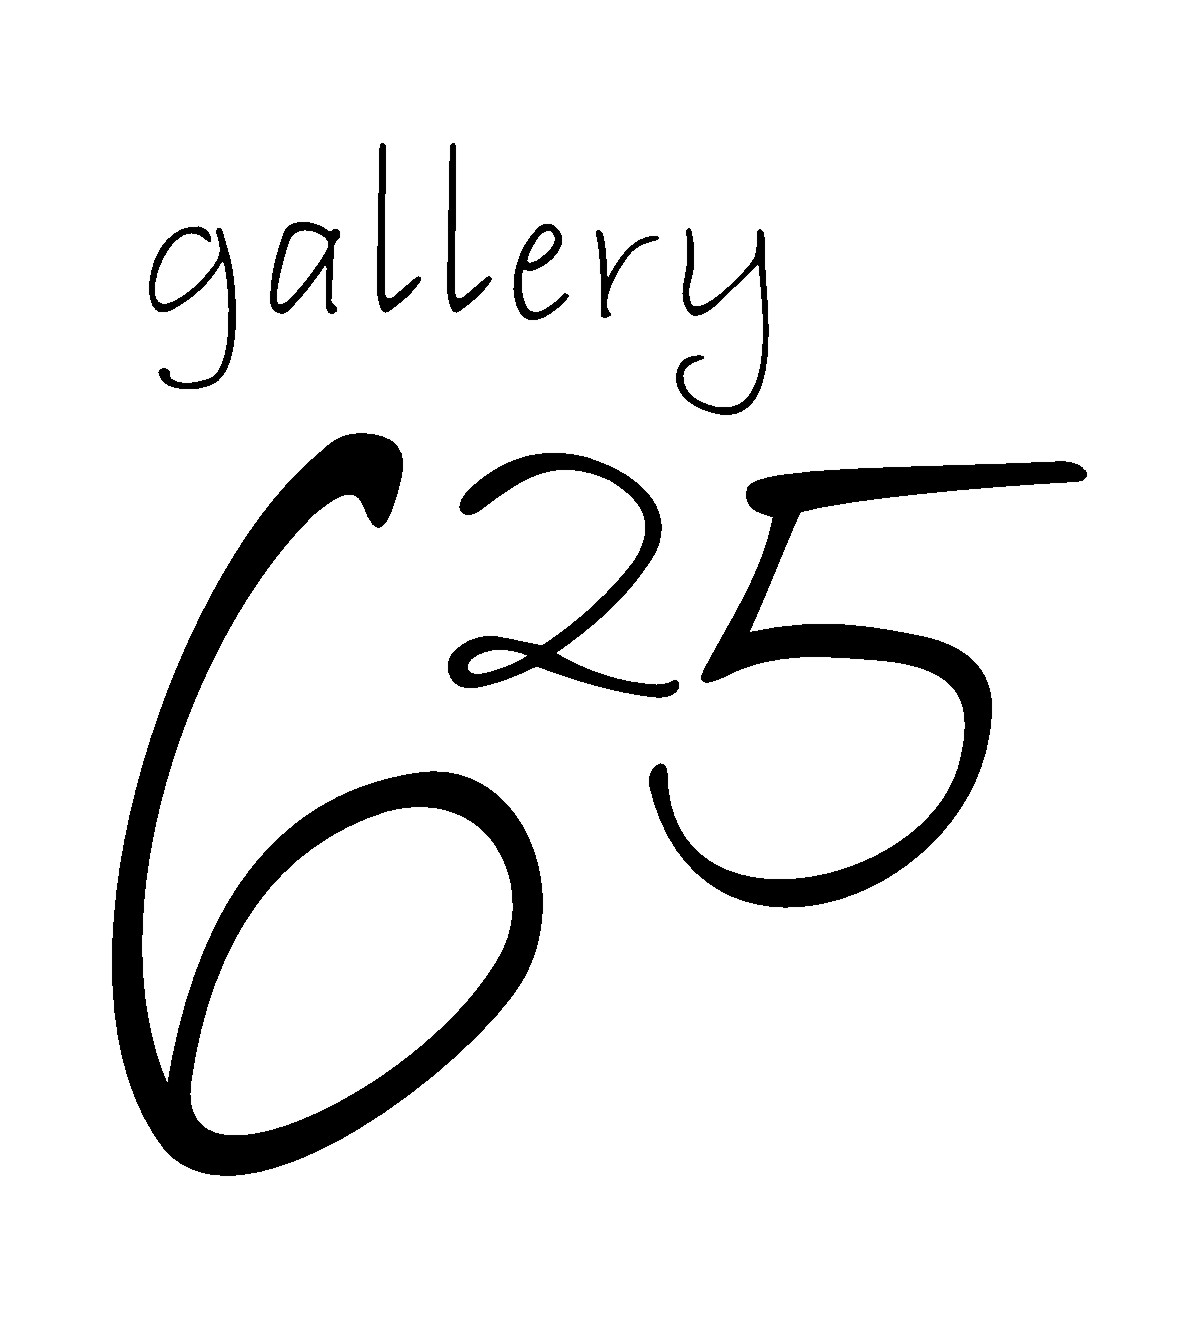 Gallery625_Again